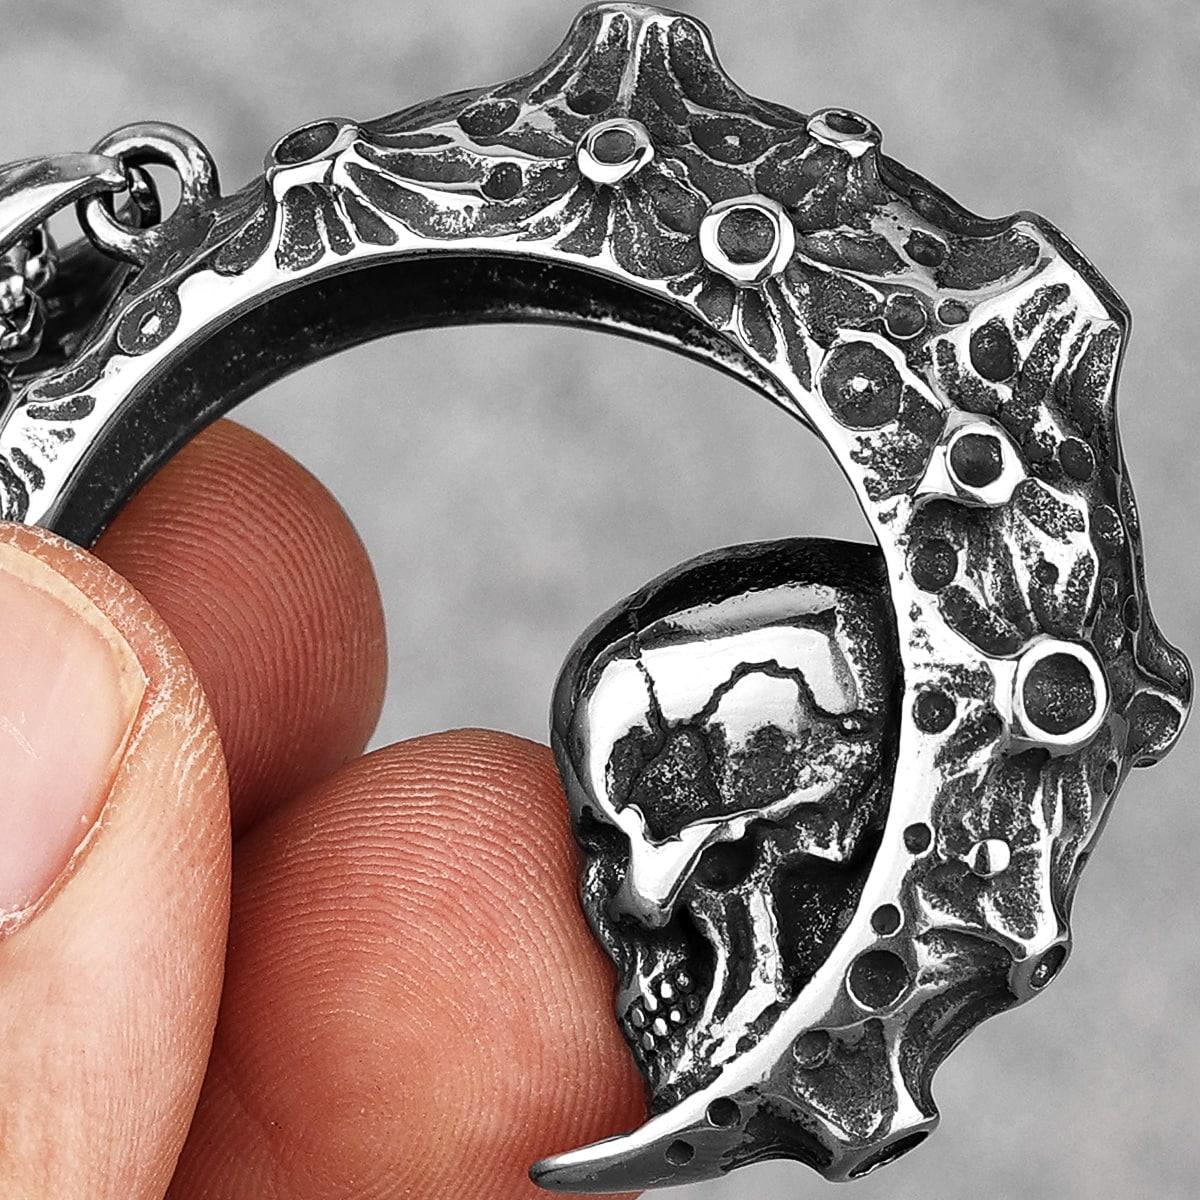 Romantic Moon Skull Pendant Necklace Jewelry Gift - Wonder Skull